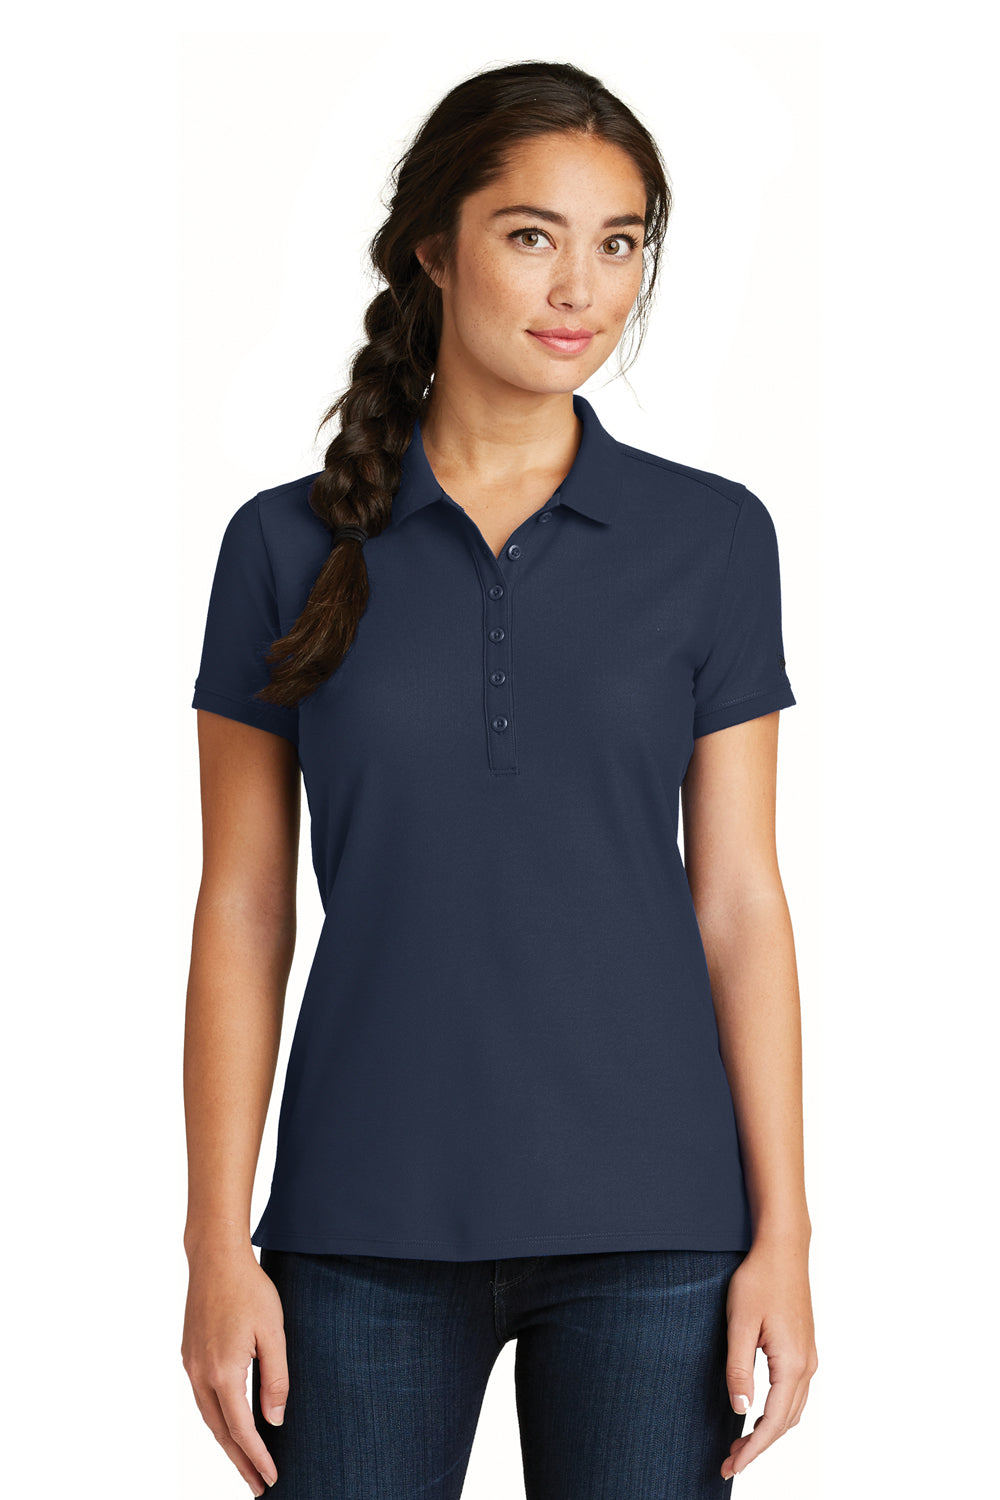 New Era LNEA300 Womens Venue Home Plate Moisture Wicking Short Sleeve Polo Shirt Navy Blue Front